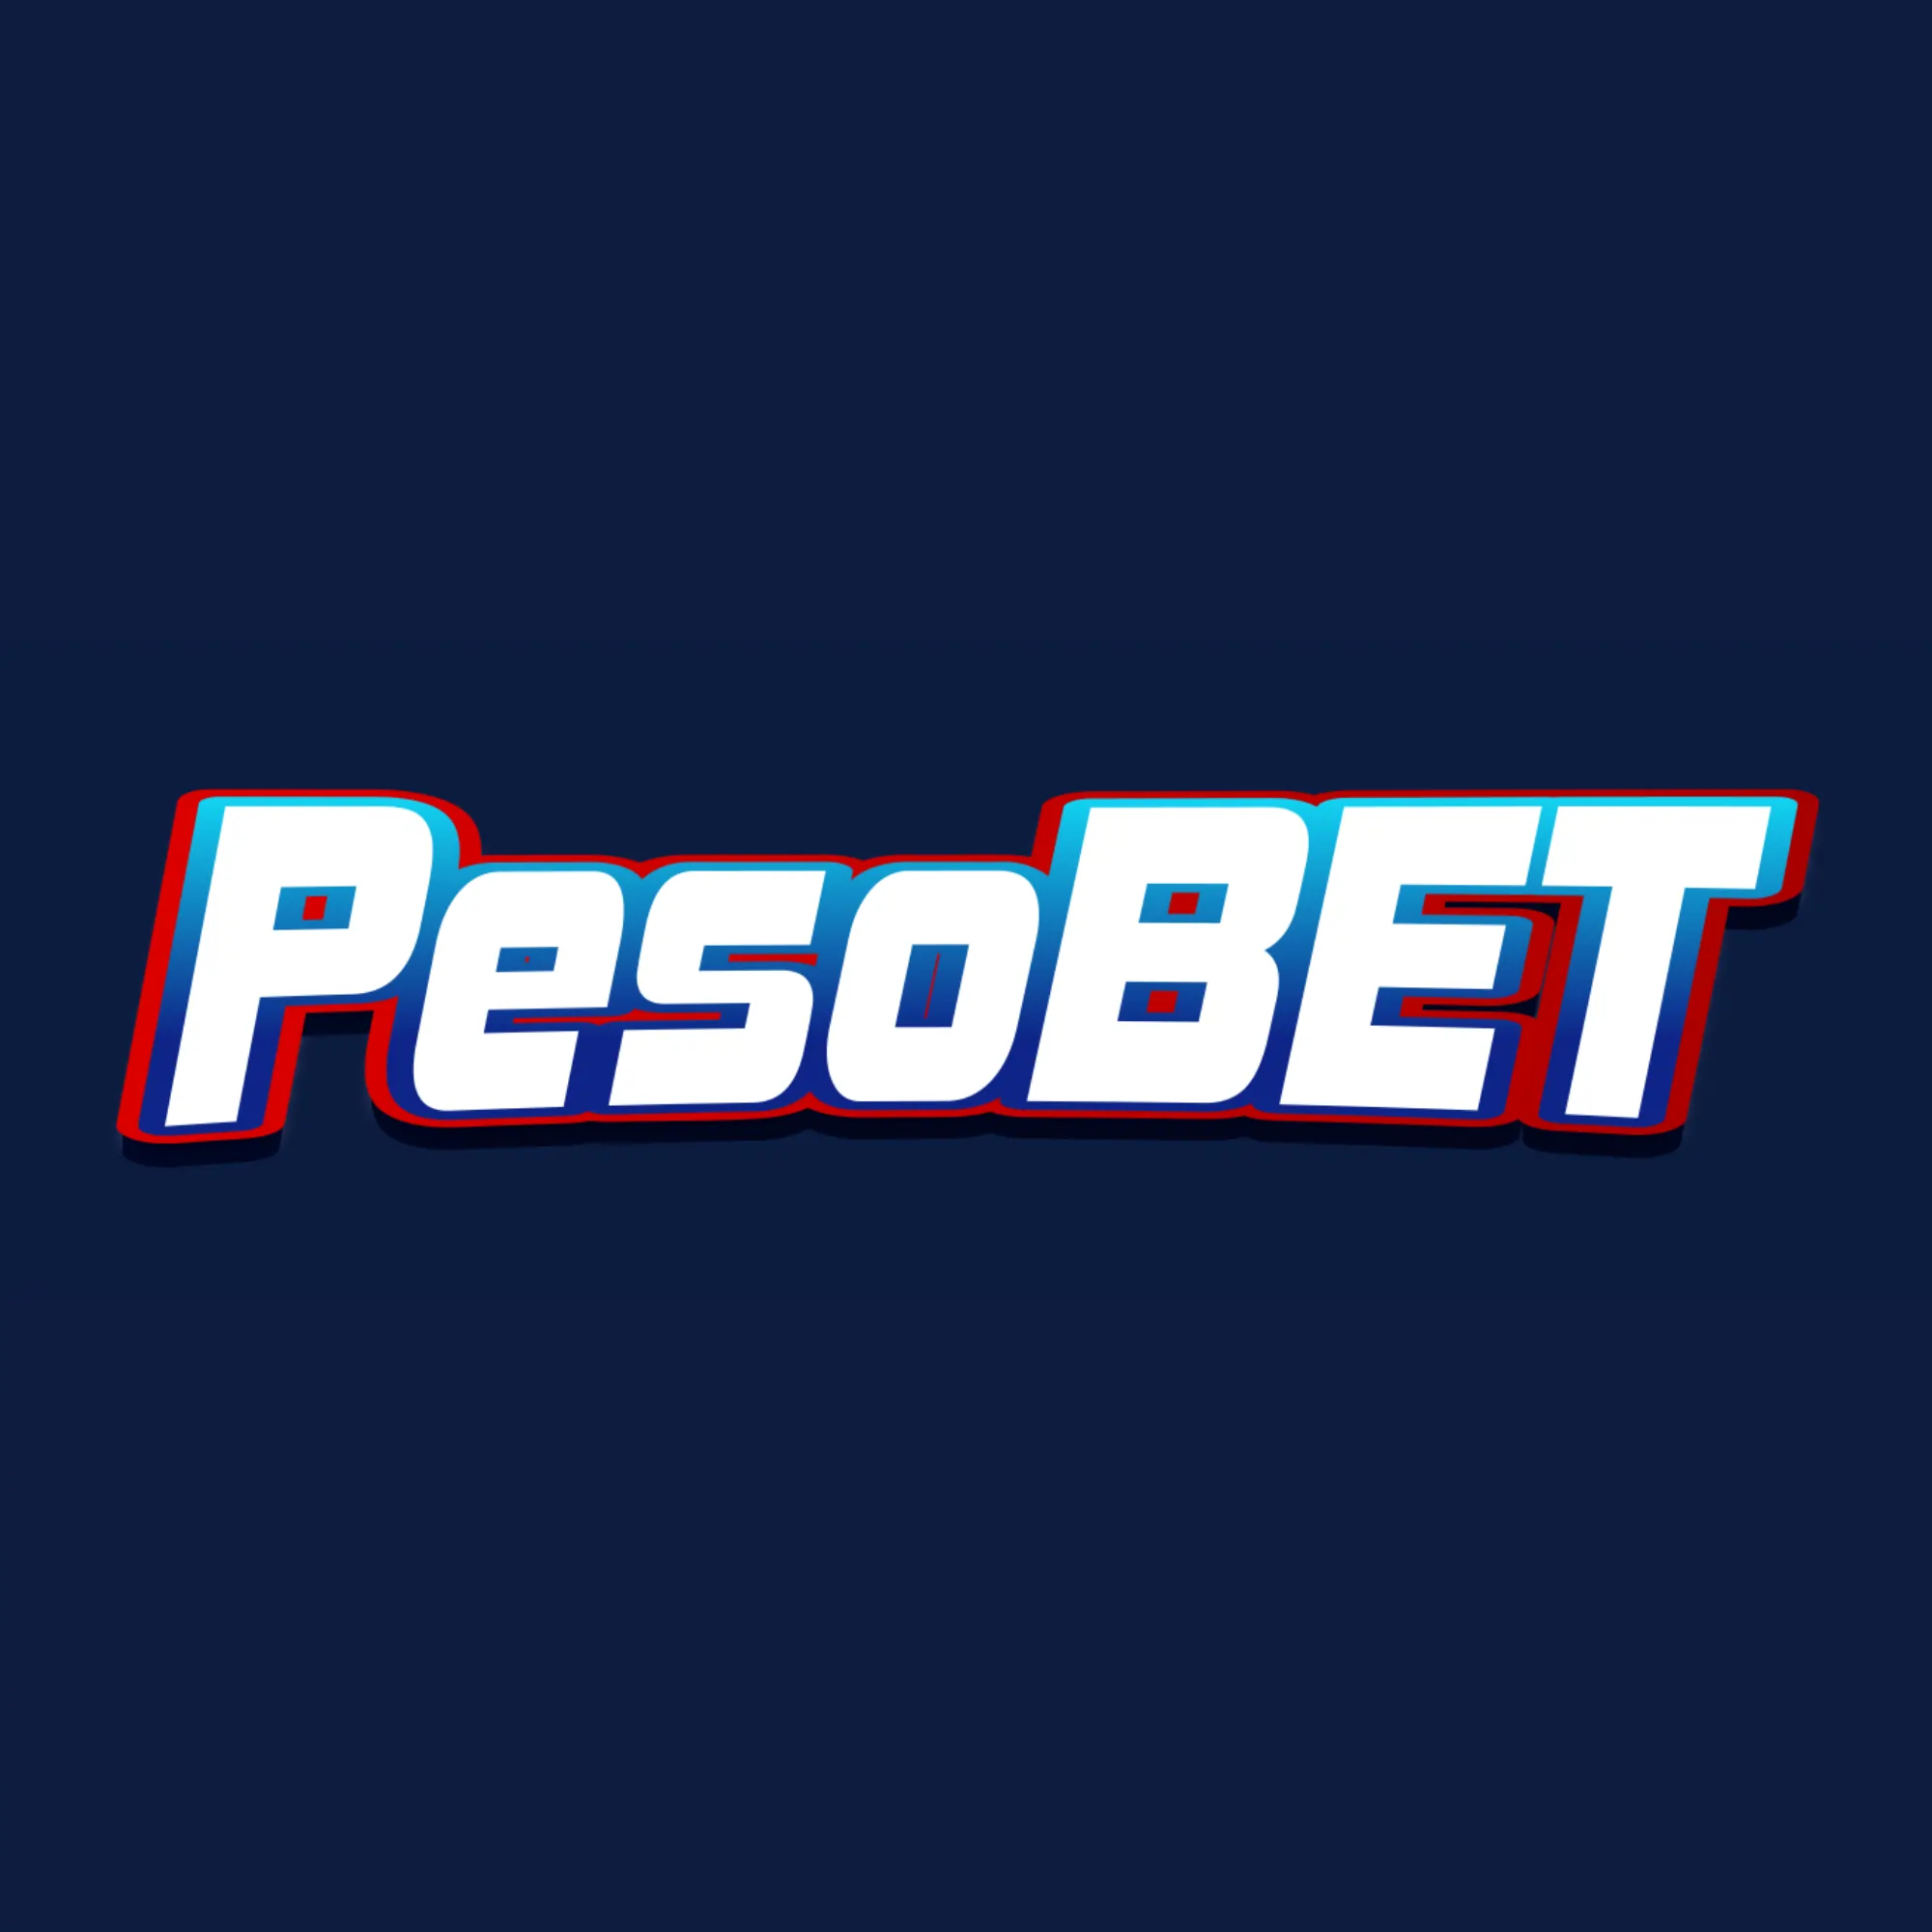 pesobet logo